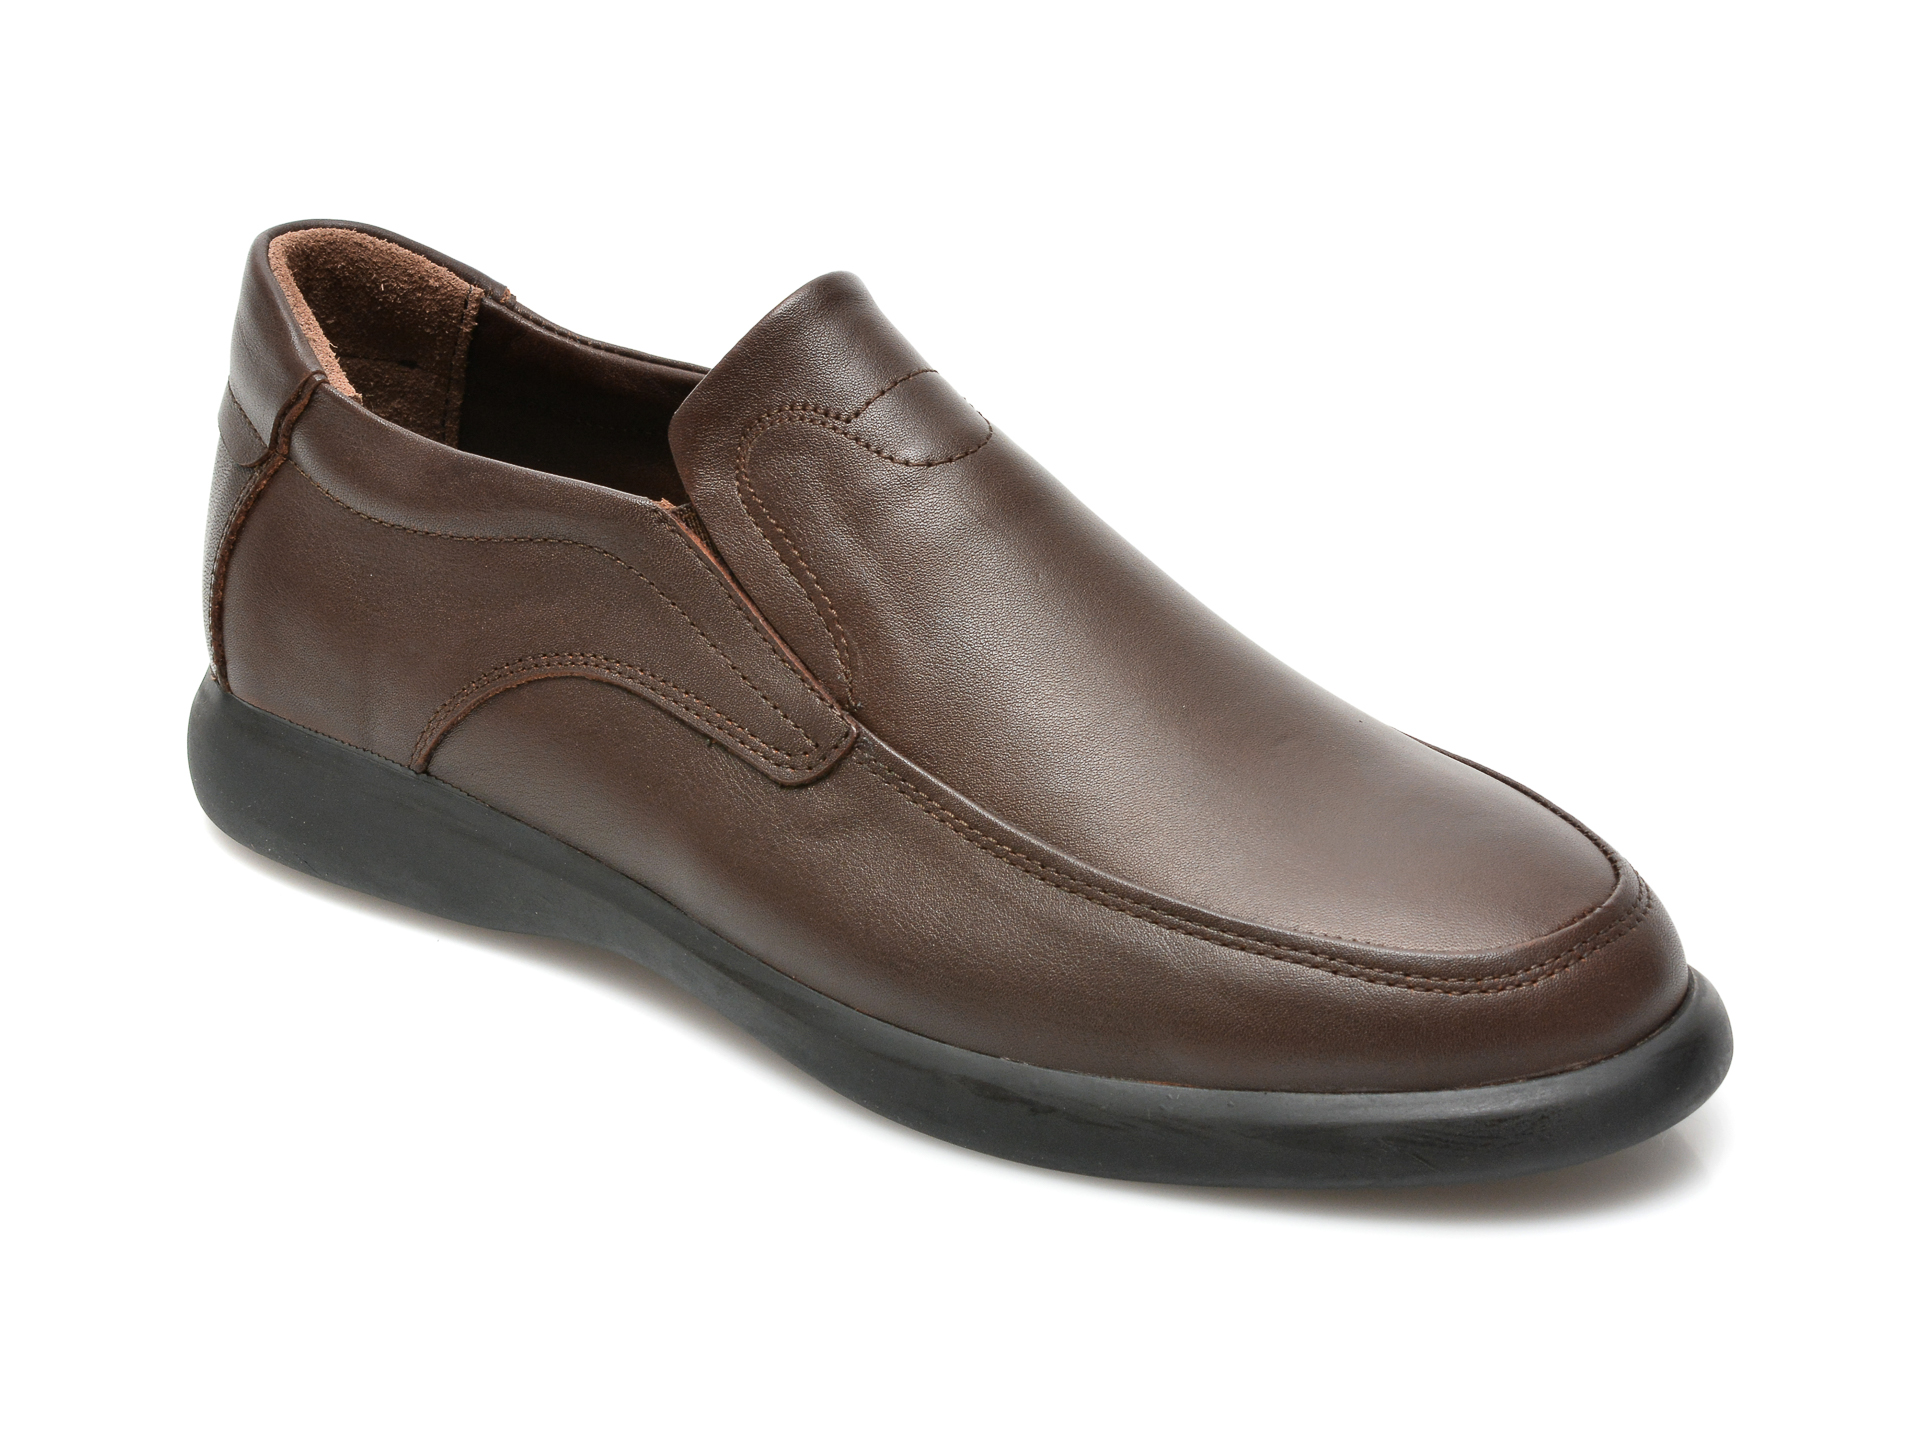 Pantofi OTTER maro, M6139, din piele naturala Otter imagine 2022 13clothing.ro